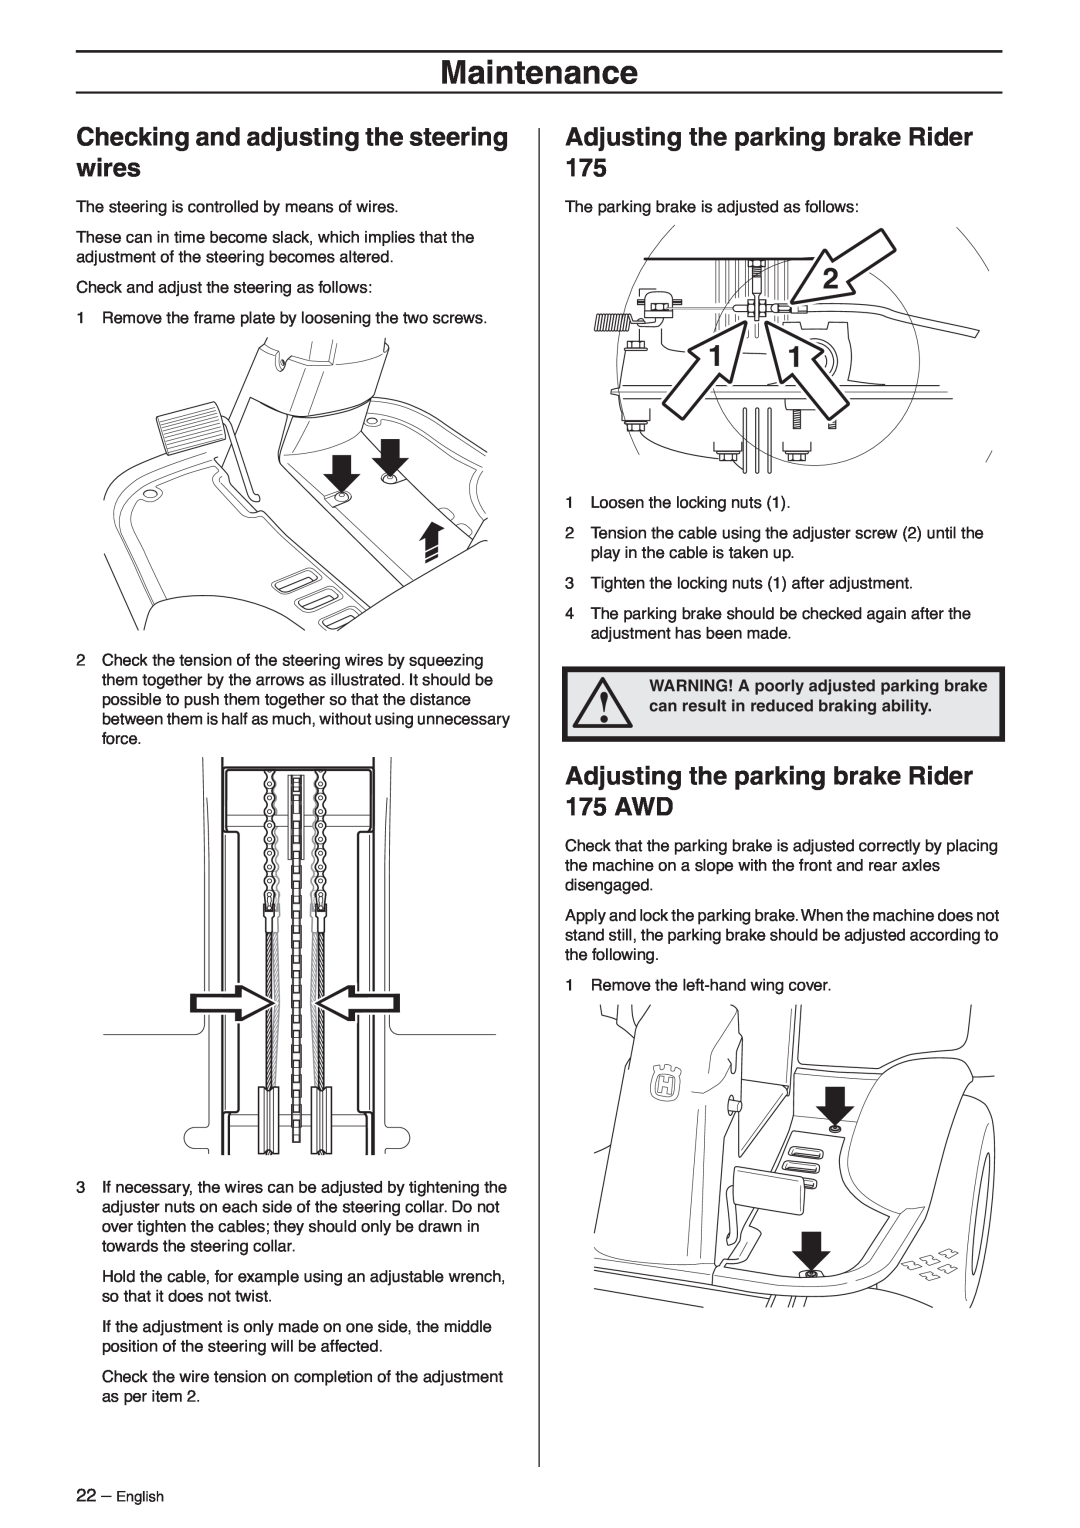 Husqvarna 175 AWD manual Checking and adjusting the steering wires, Adjusting the parking brake Rider, Maintenance 